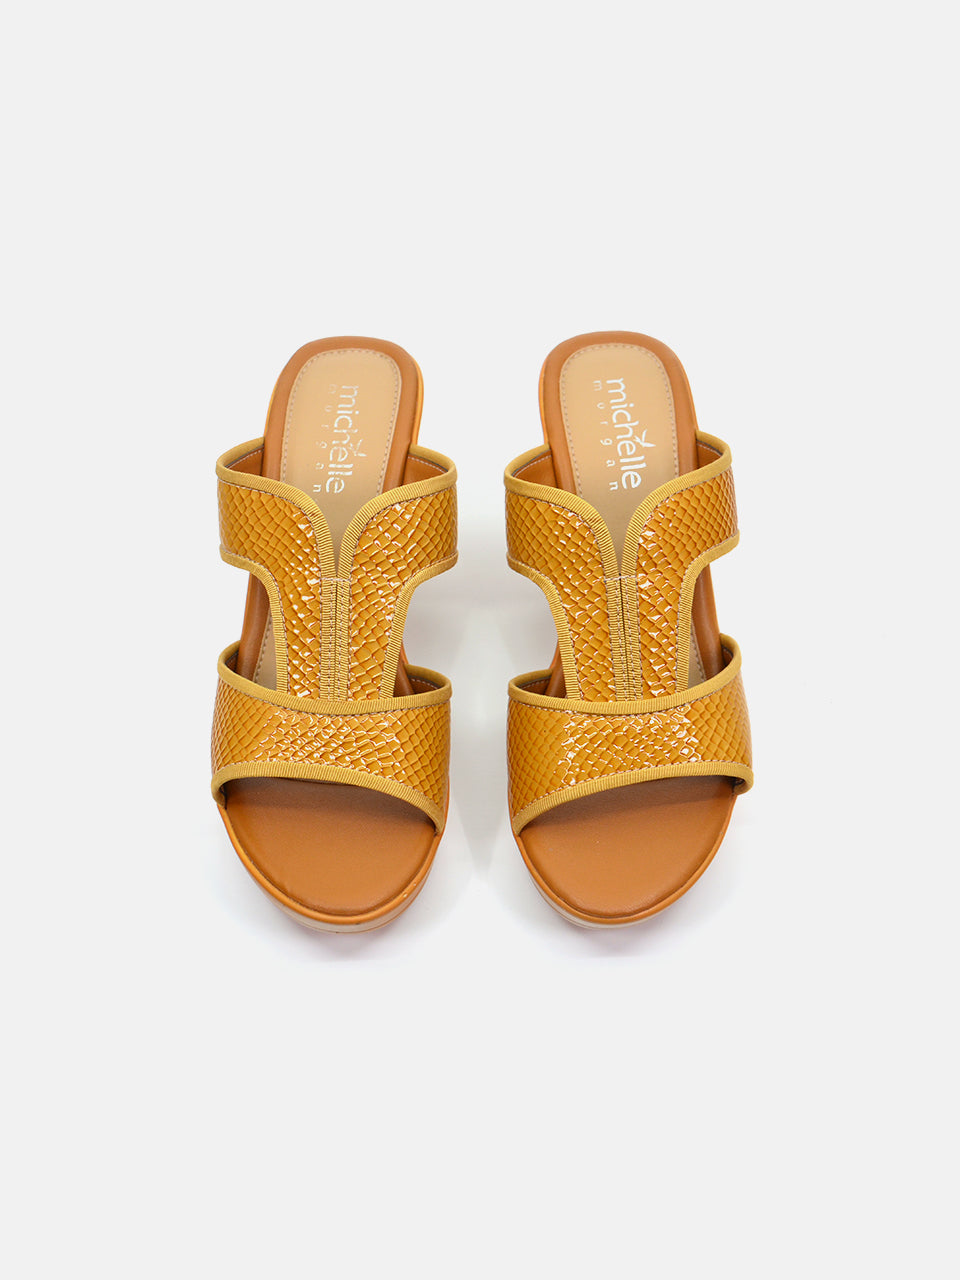 Michelle Morgan 19017-L1 Women's Heeled Sandals #color_Tan